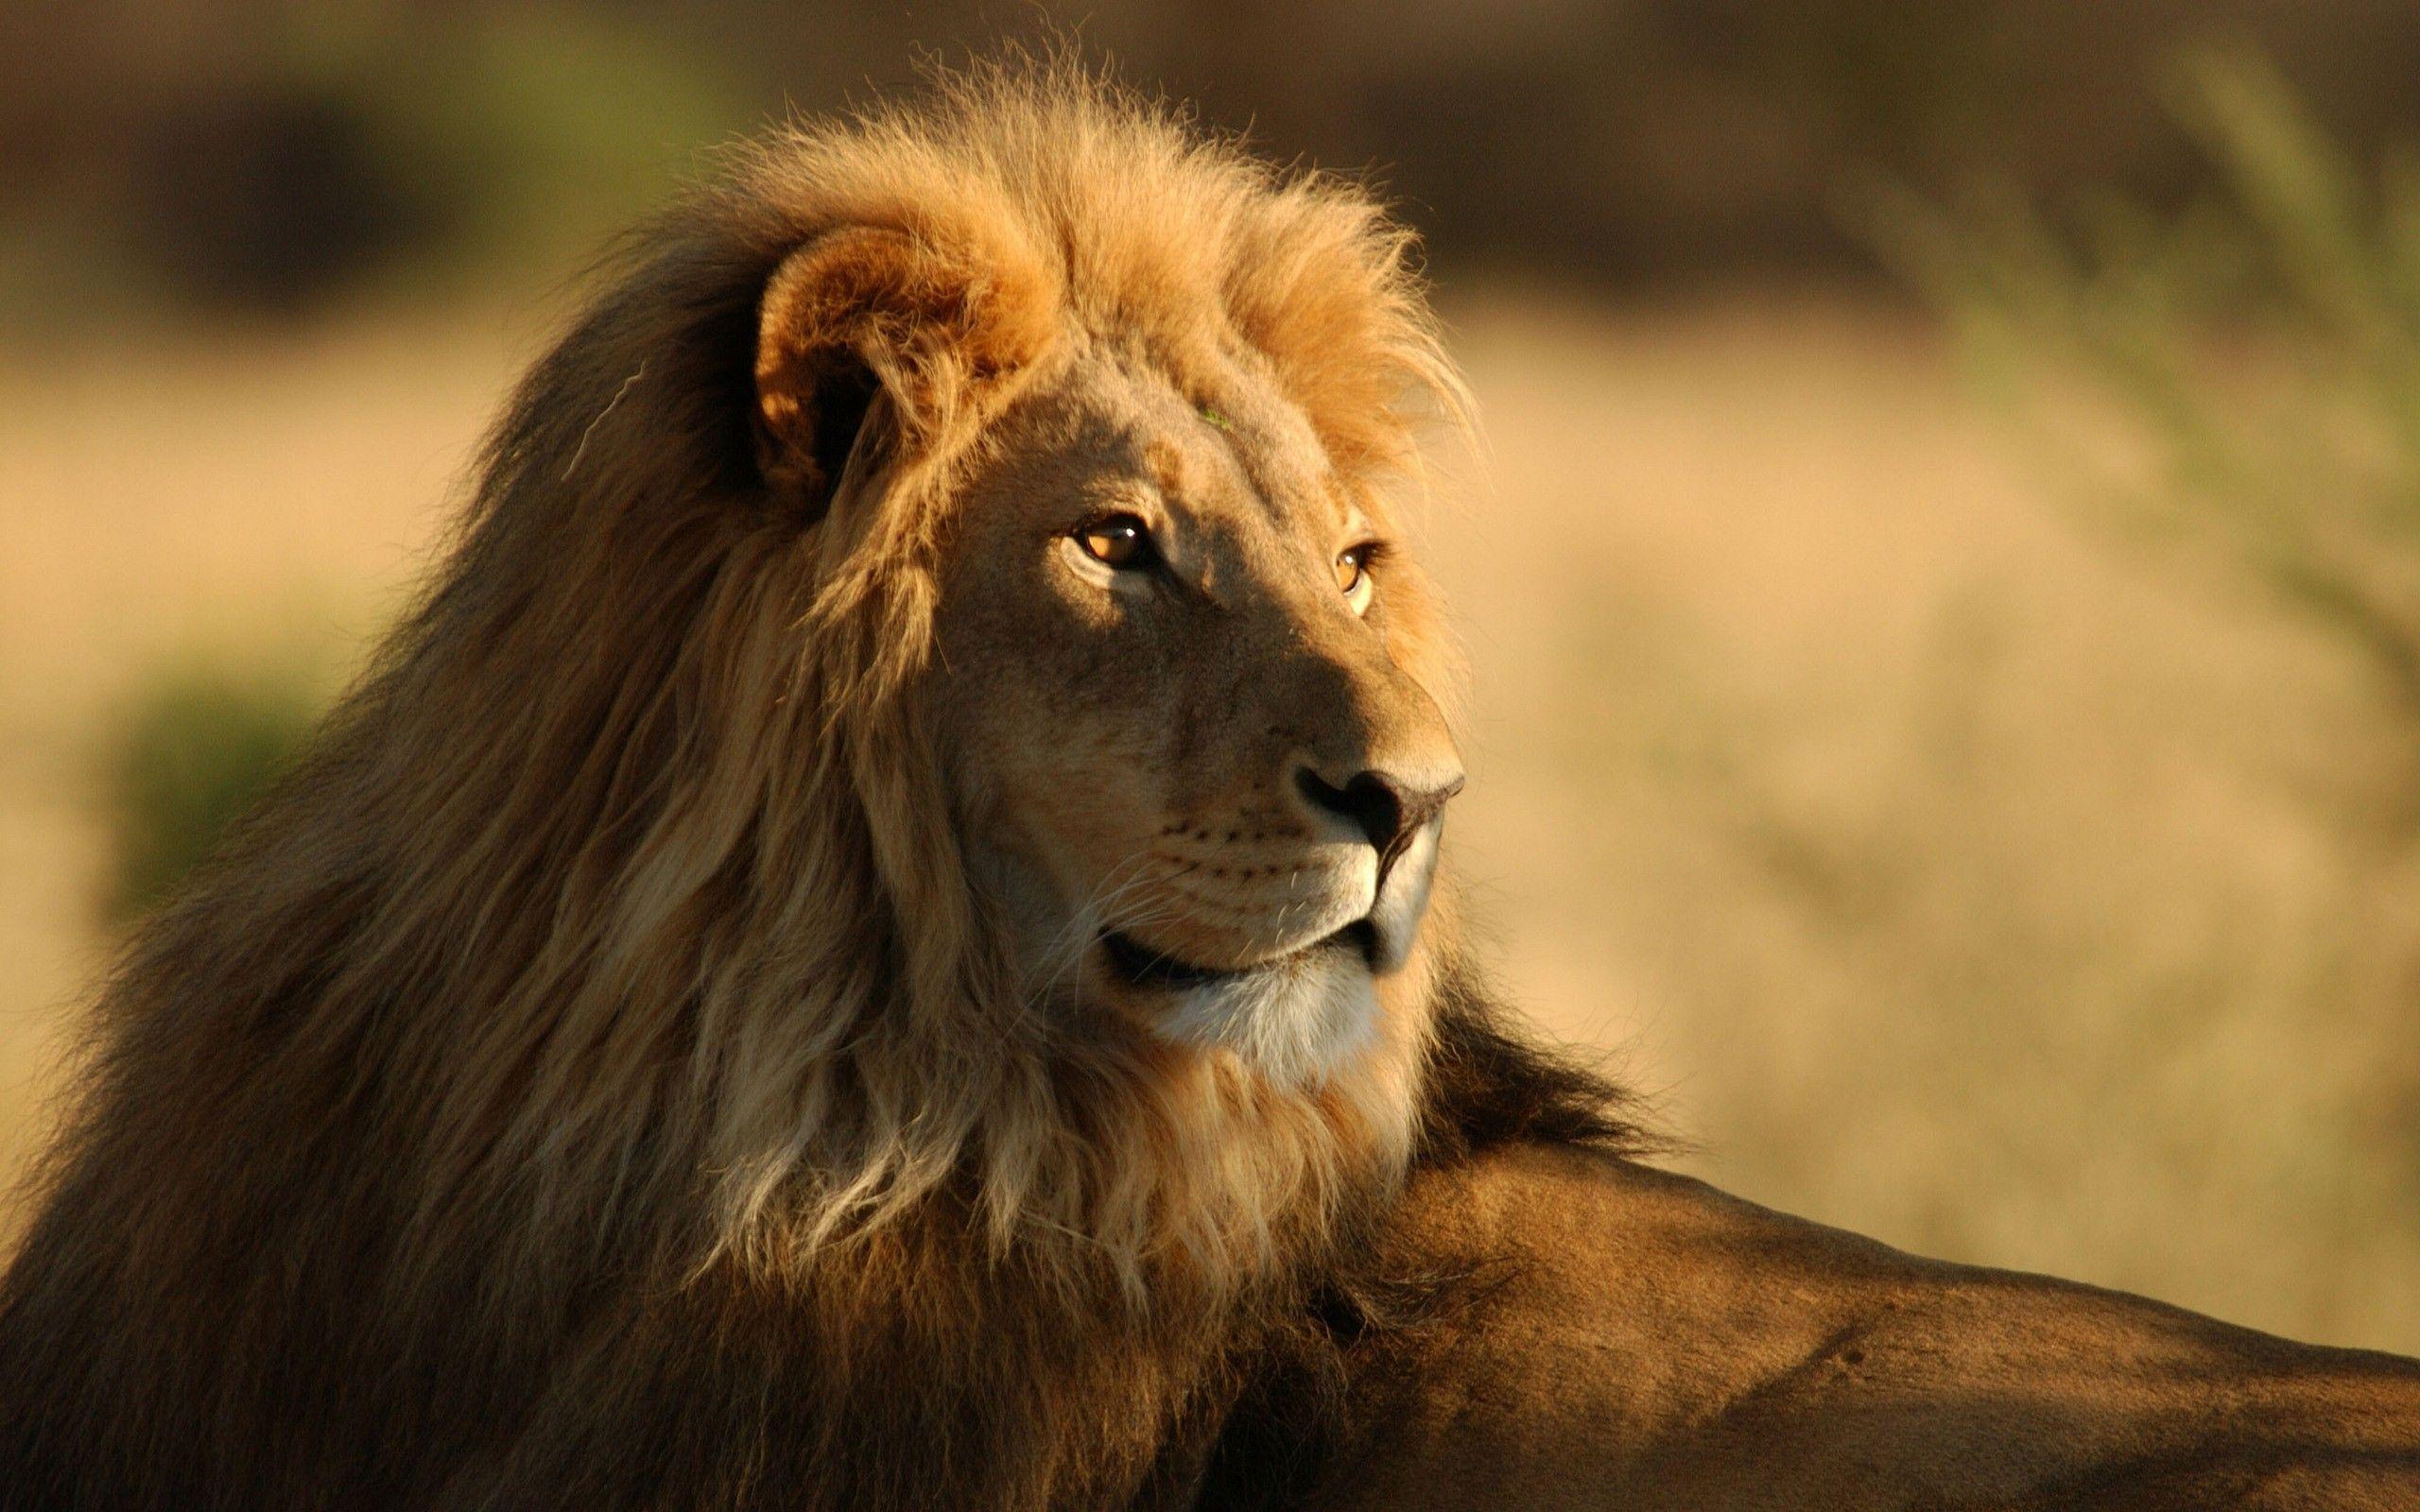 Africa animals lions wildlife wallpaper. PC